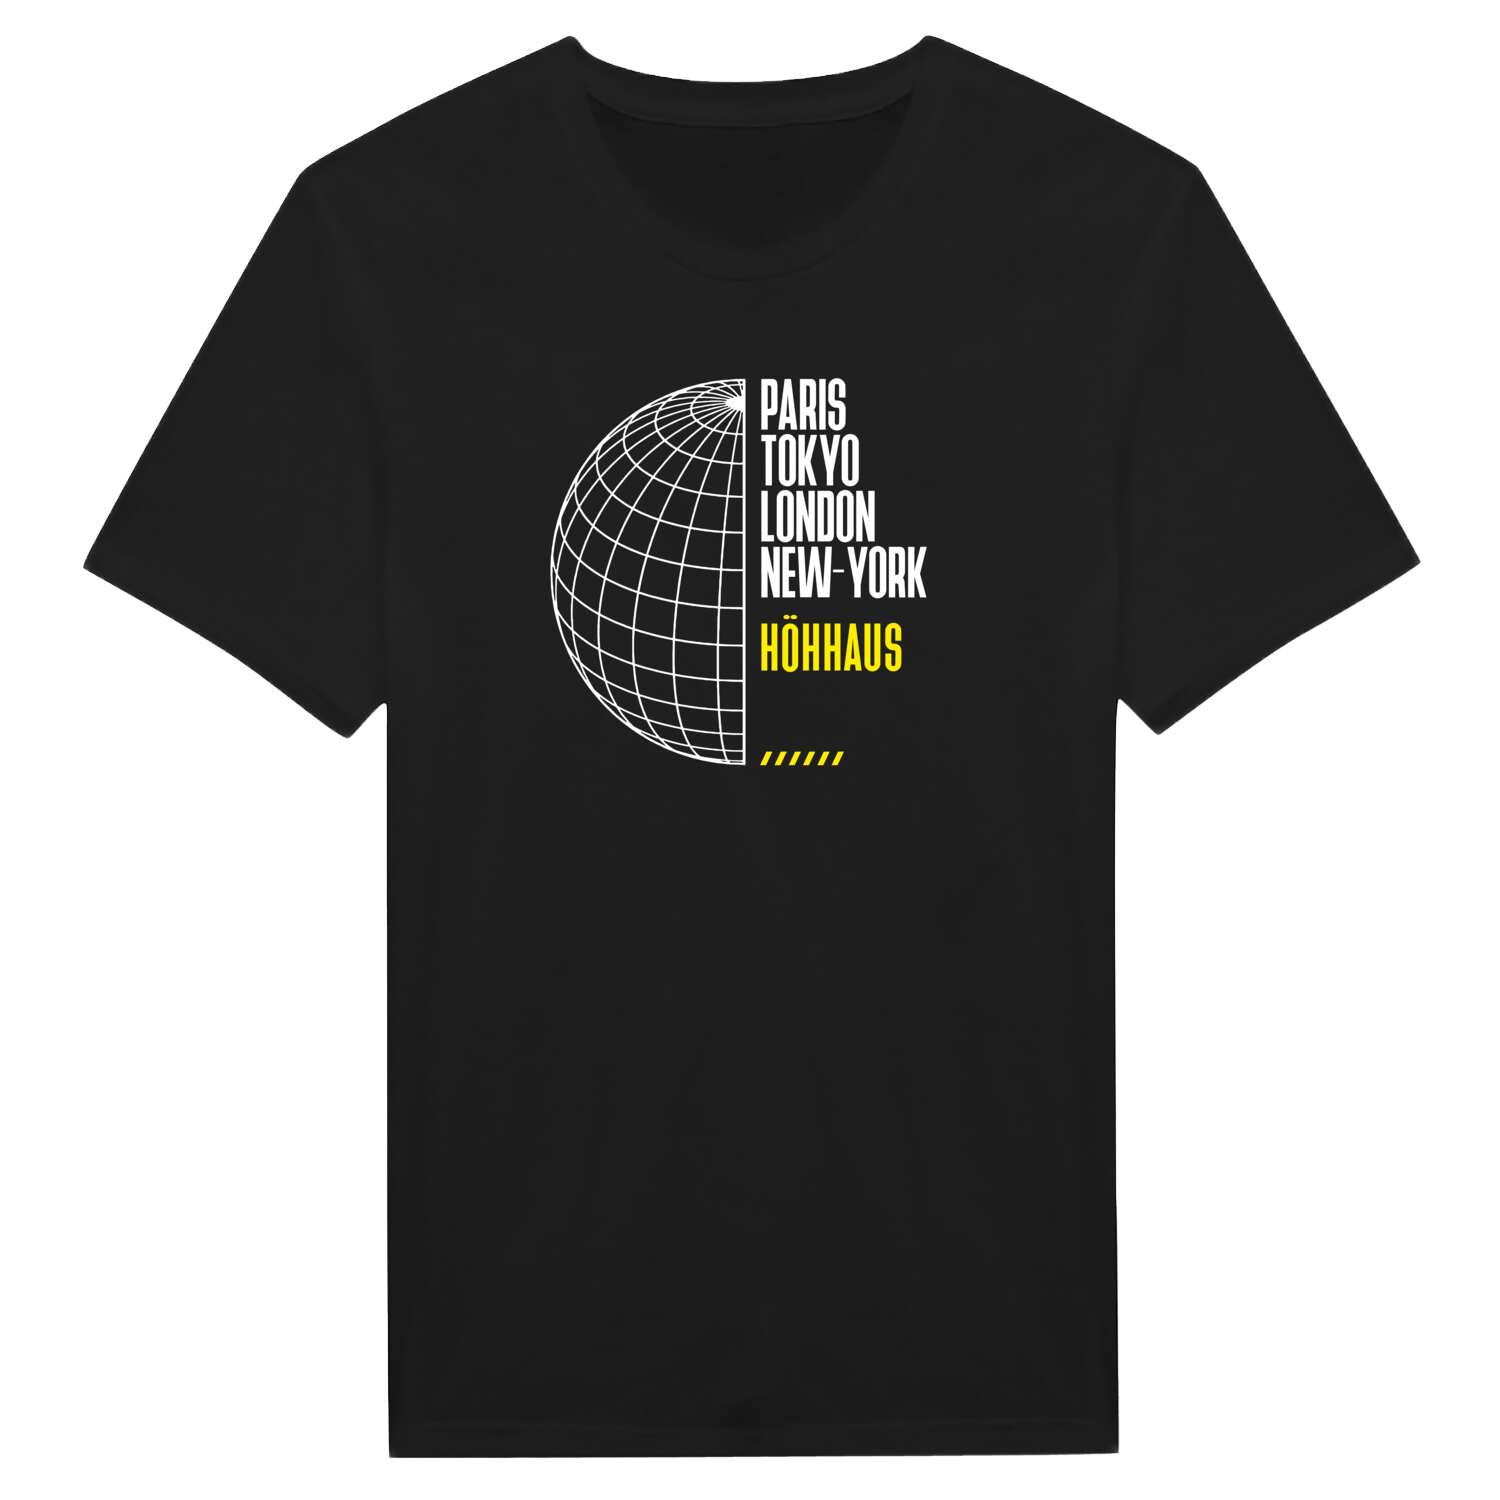 Höhhaus T-Shirt »Paris Tokyo London«